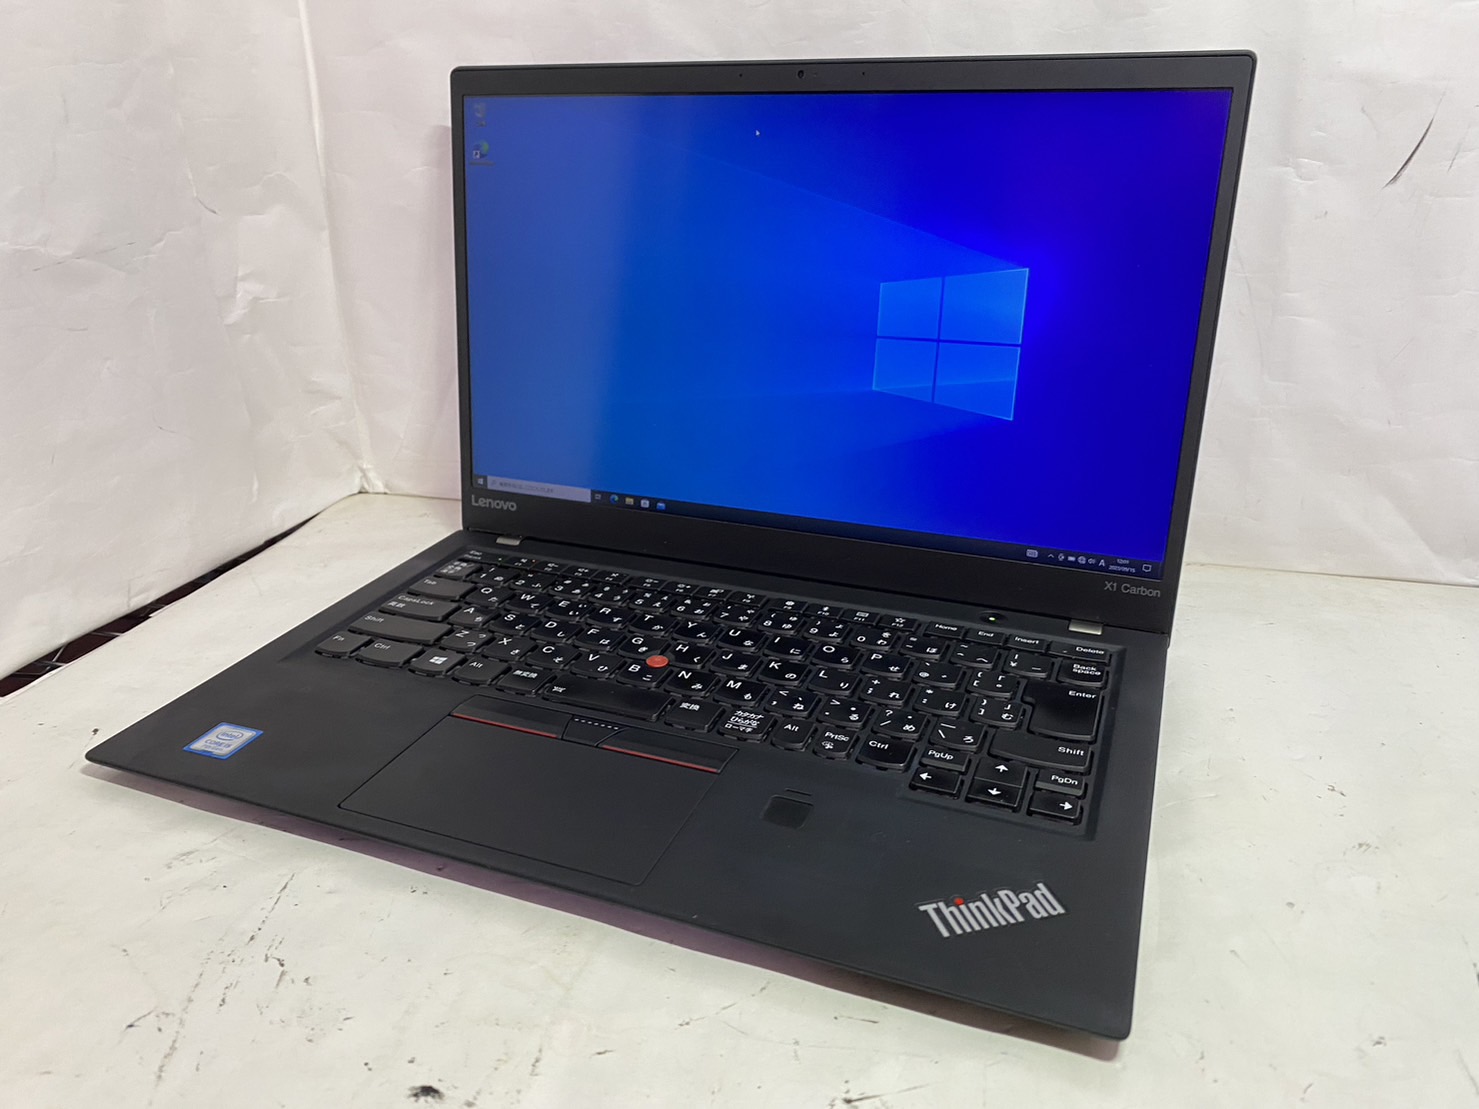 LENOVO(レノボ) ThinkPad X1 Carbon 20HQCA004JPの激安通販 - パソコン ...